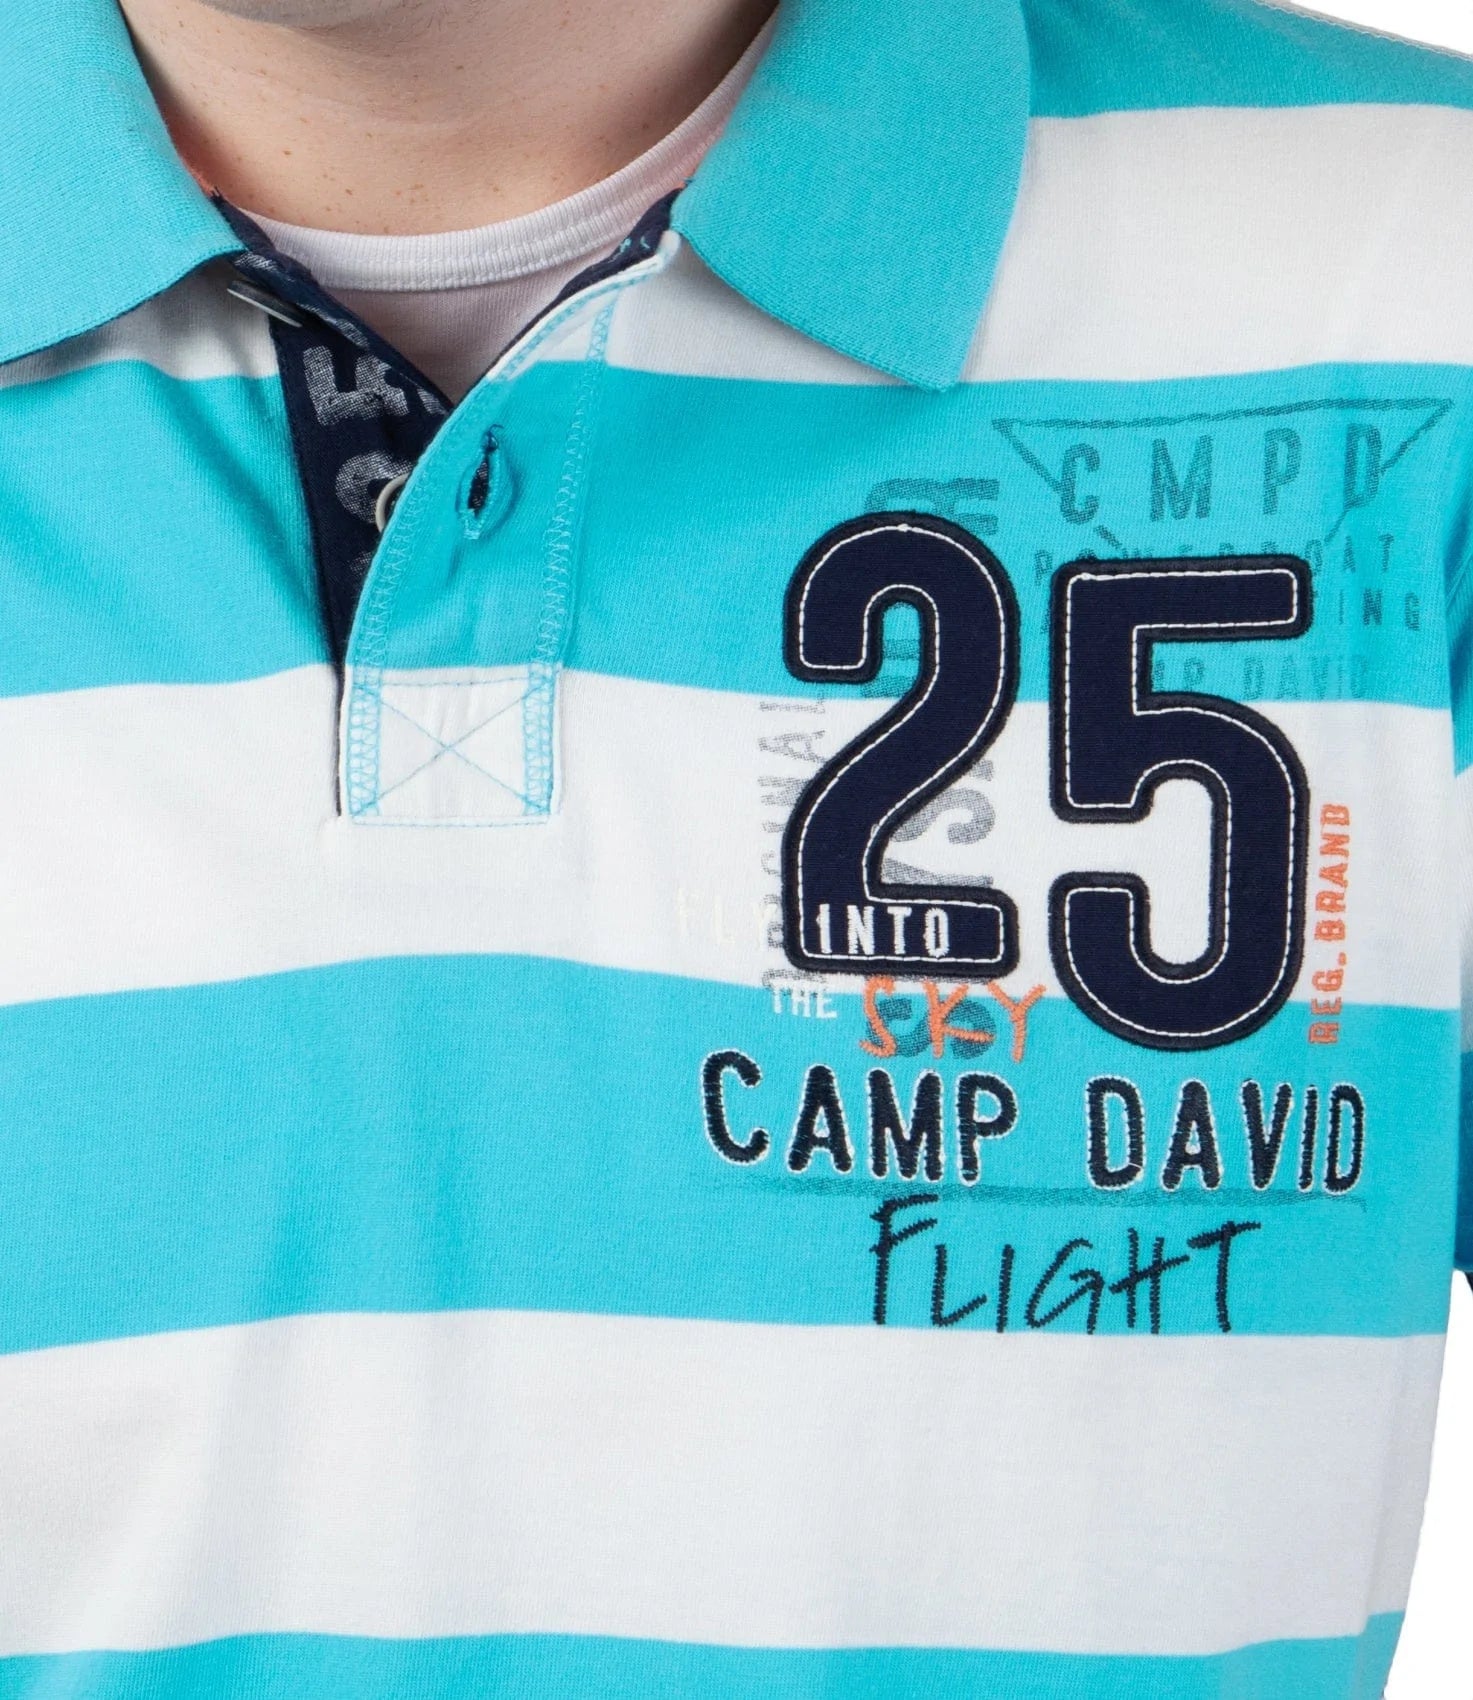 Camp David Poloshirt striped, blue from the Sky Flight